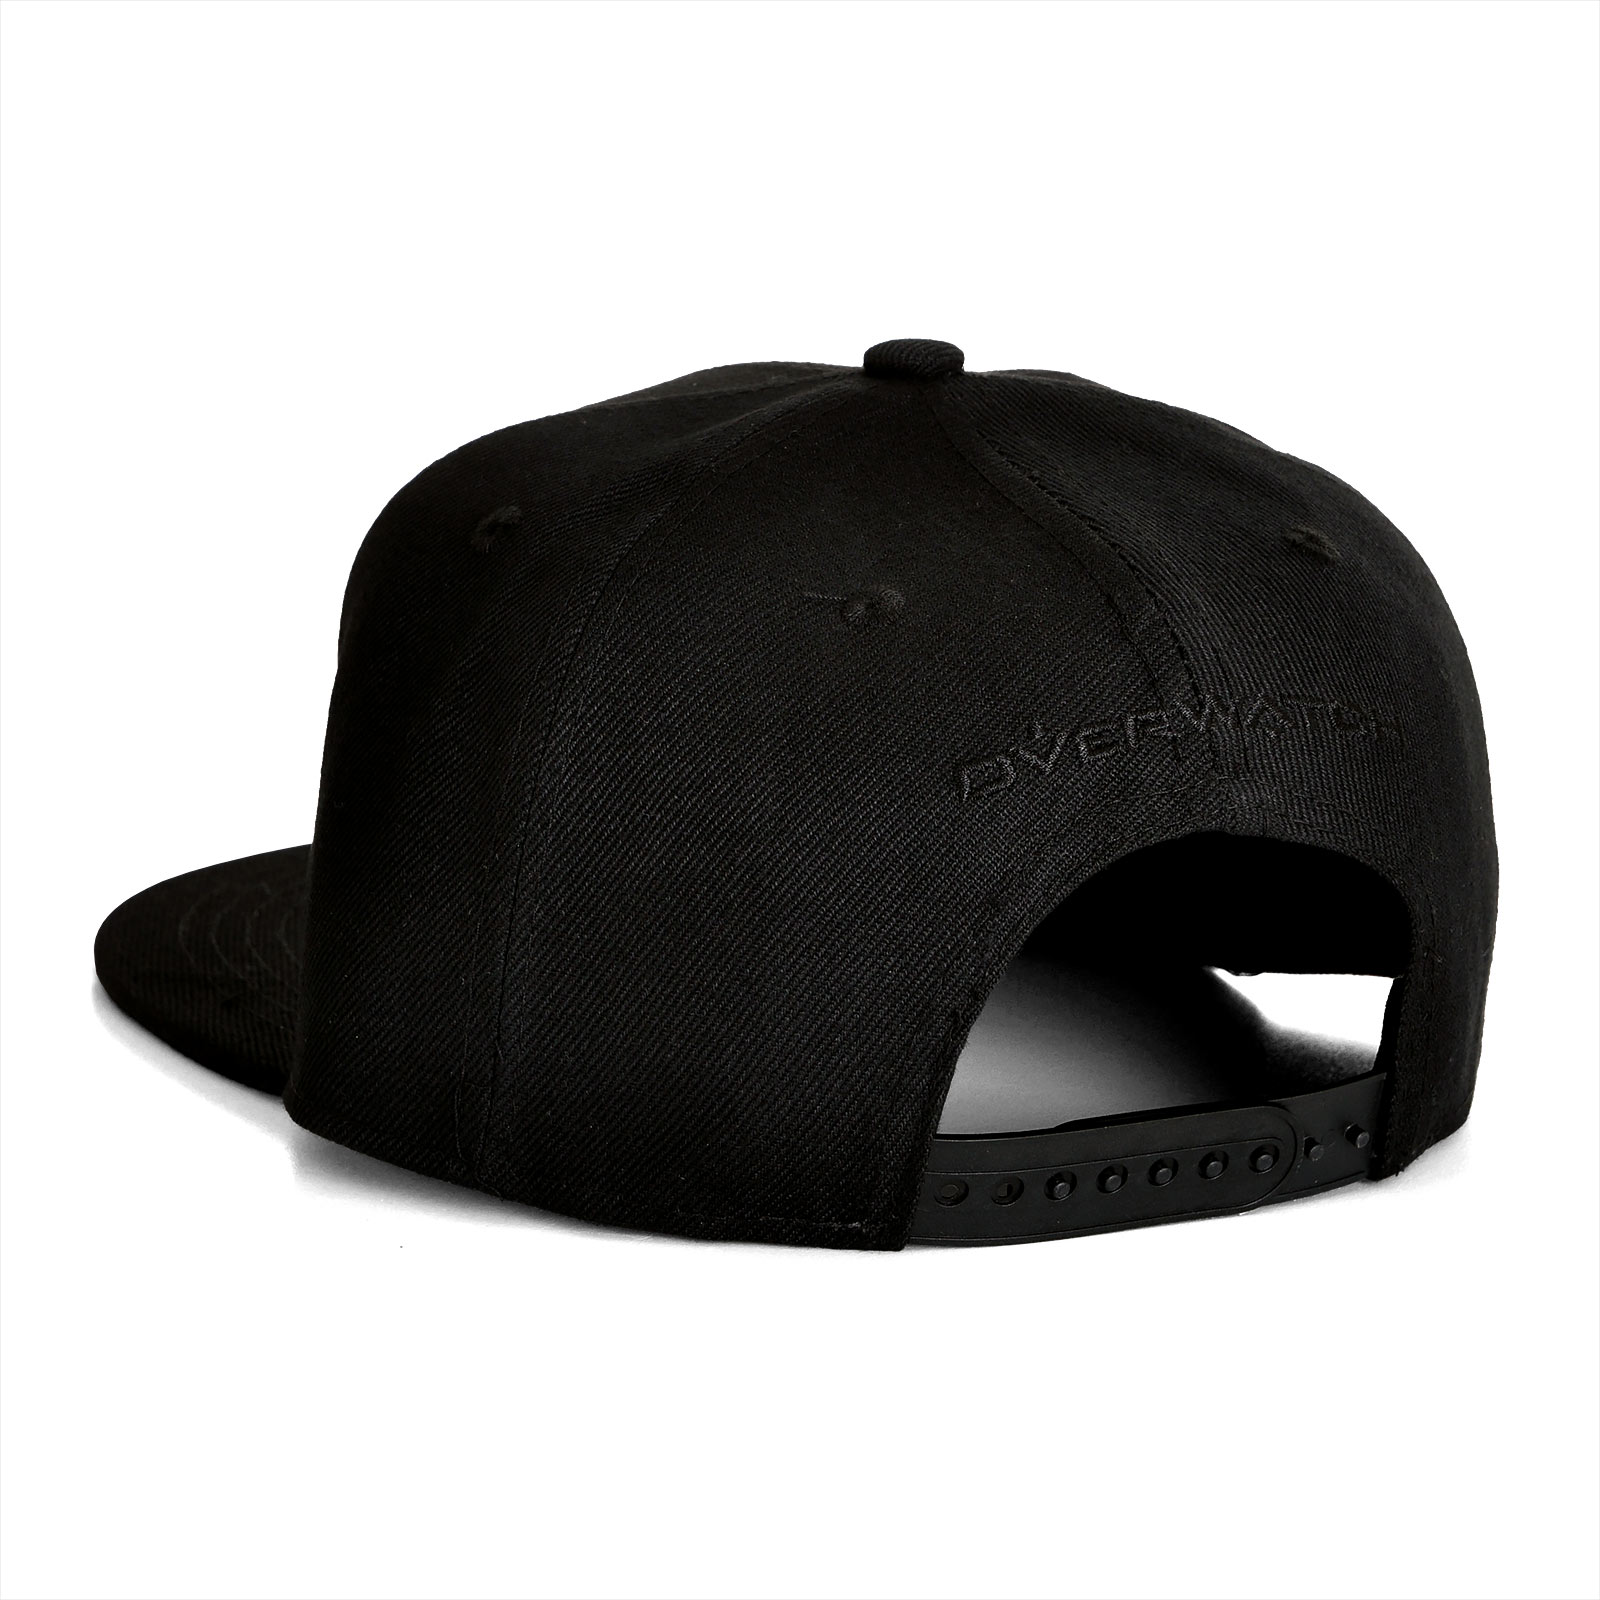 Overwatch - Black Logo Snapback Cap